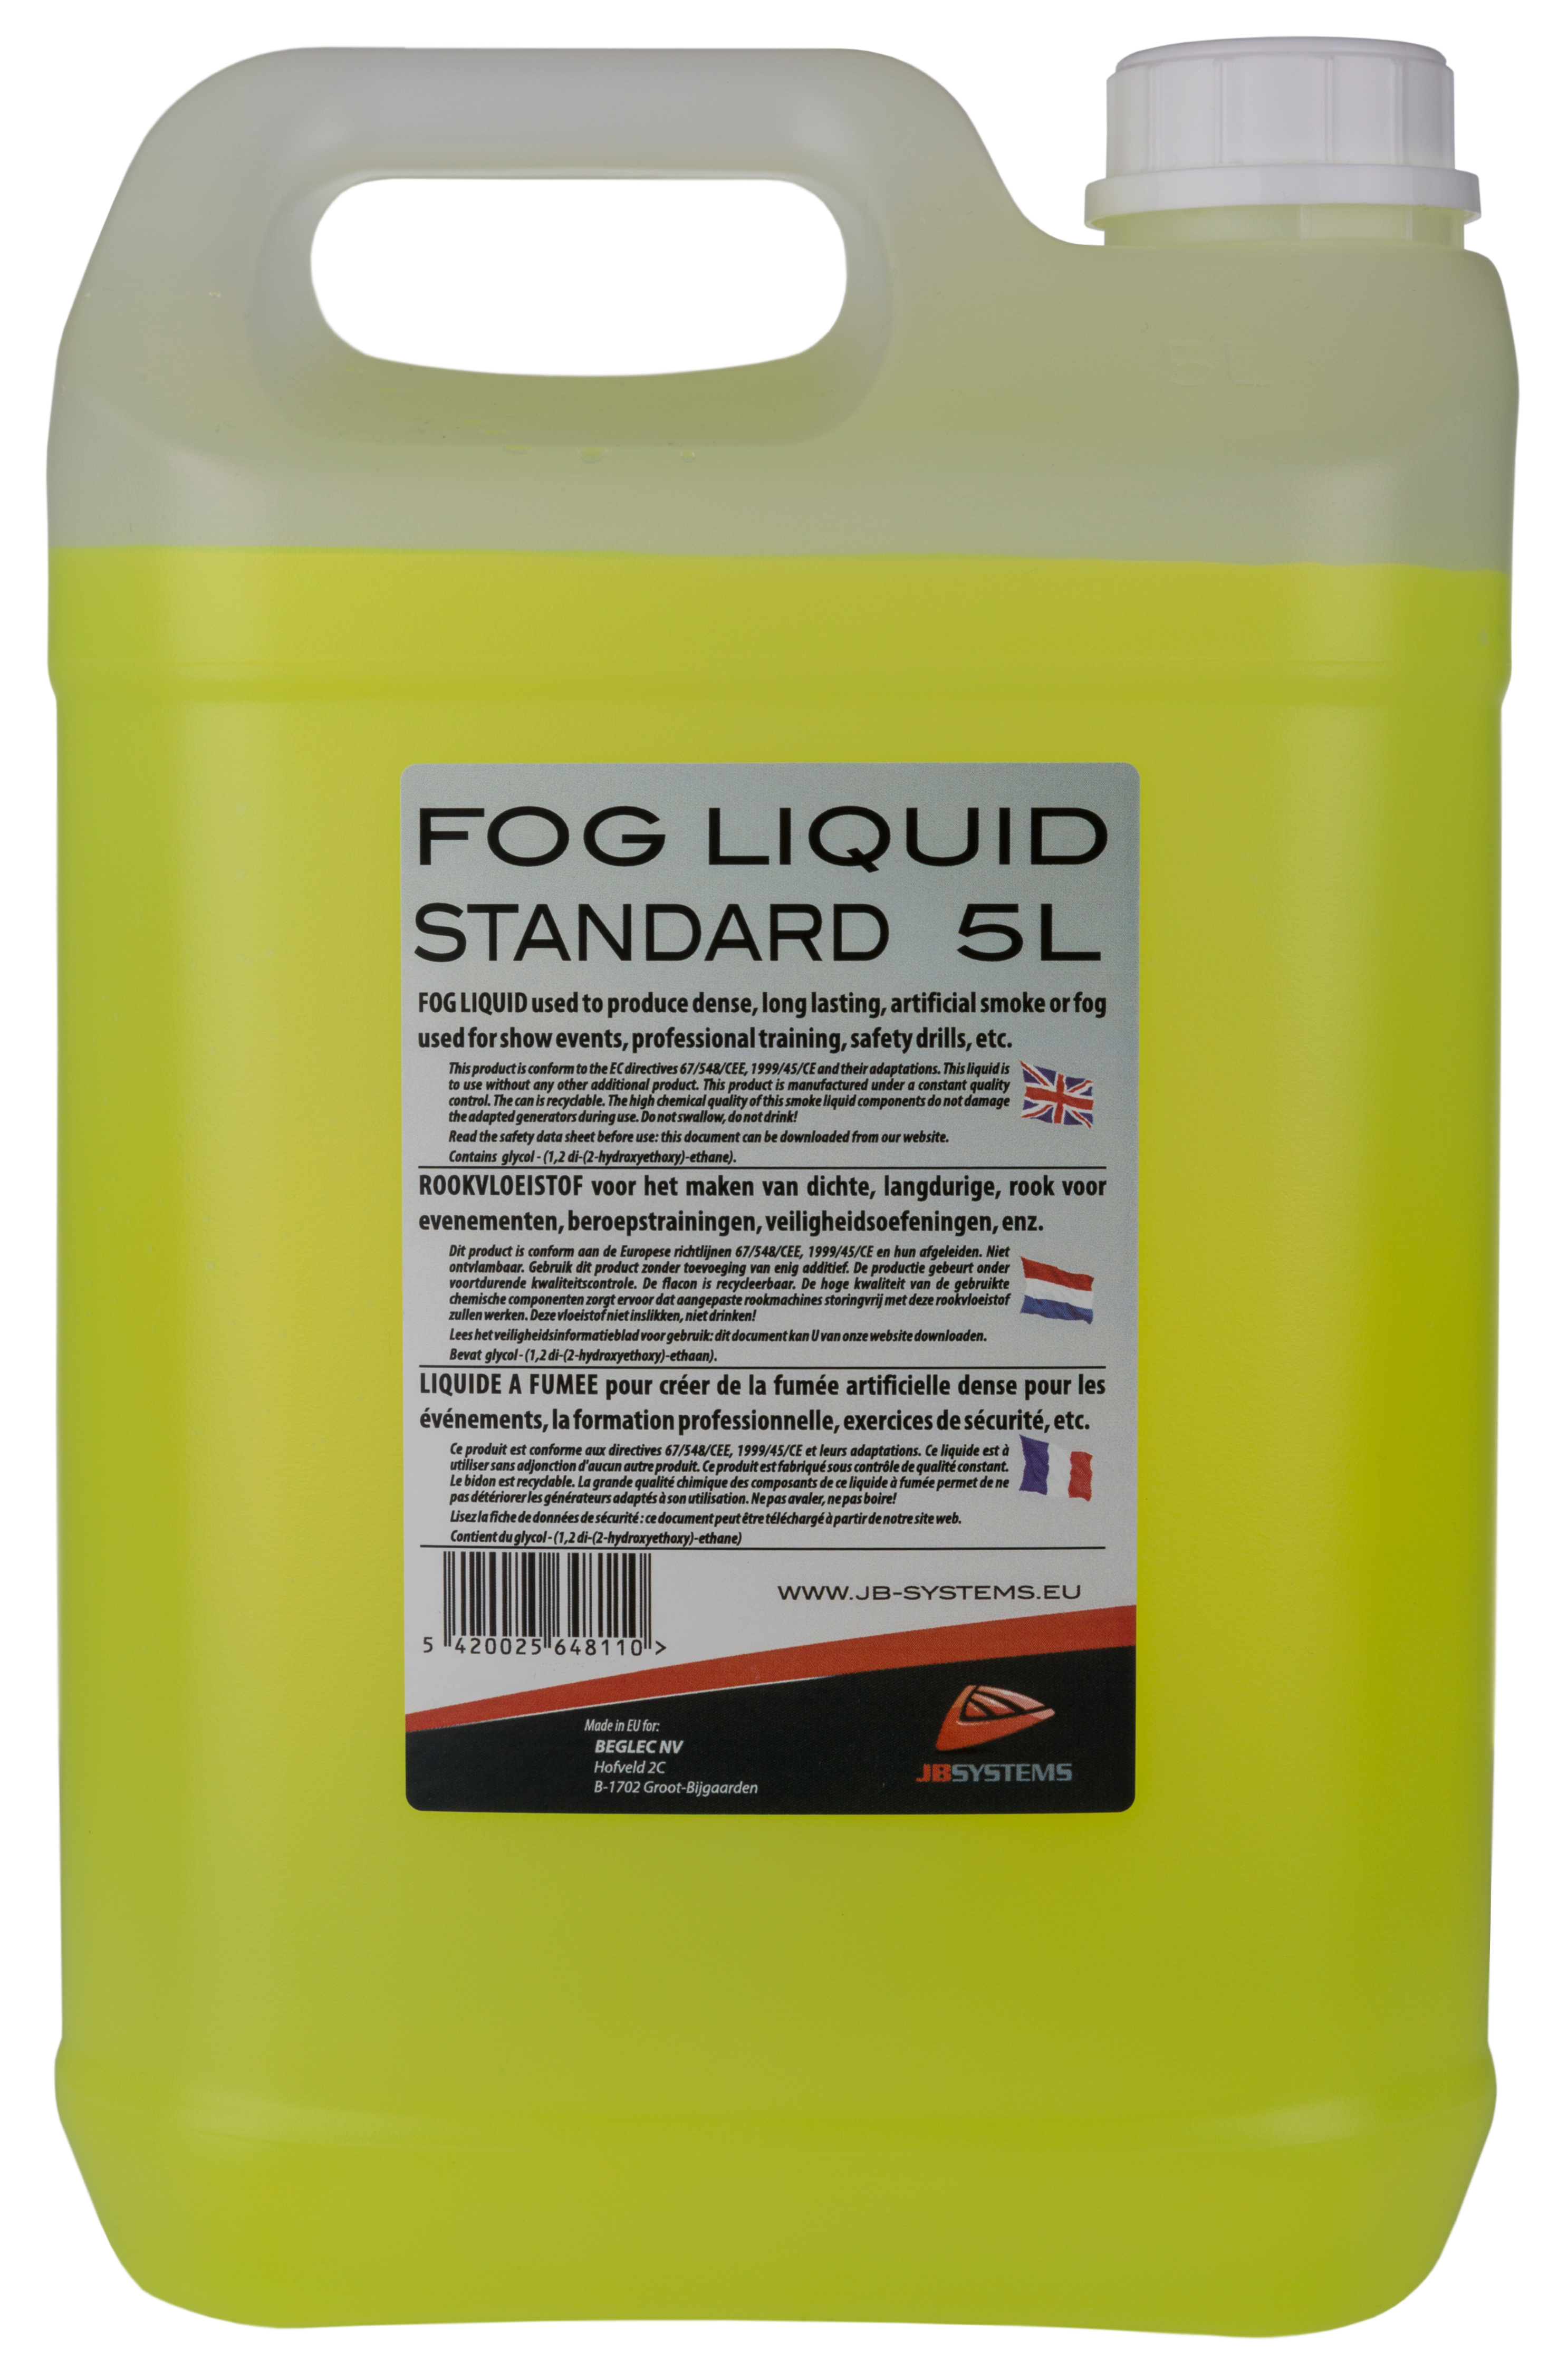 Fogger liquid standard, 5L